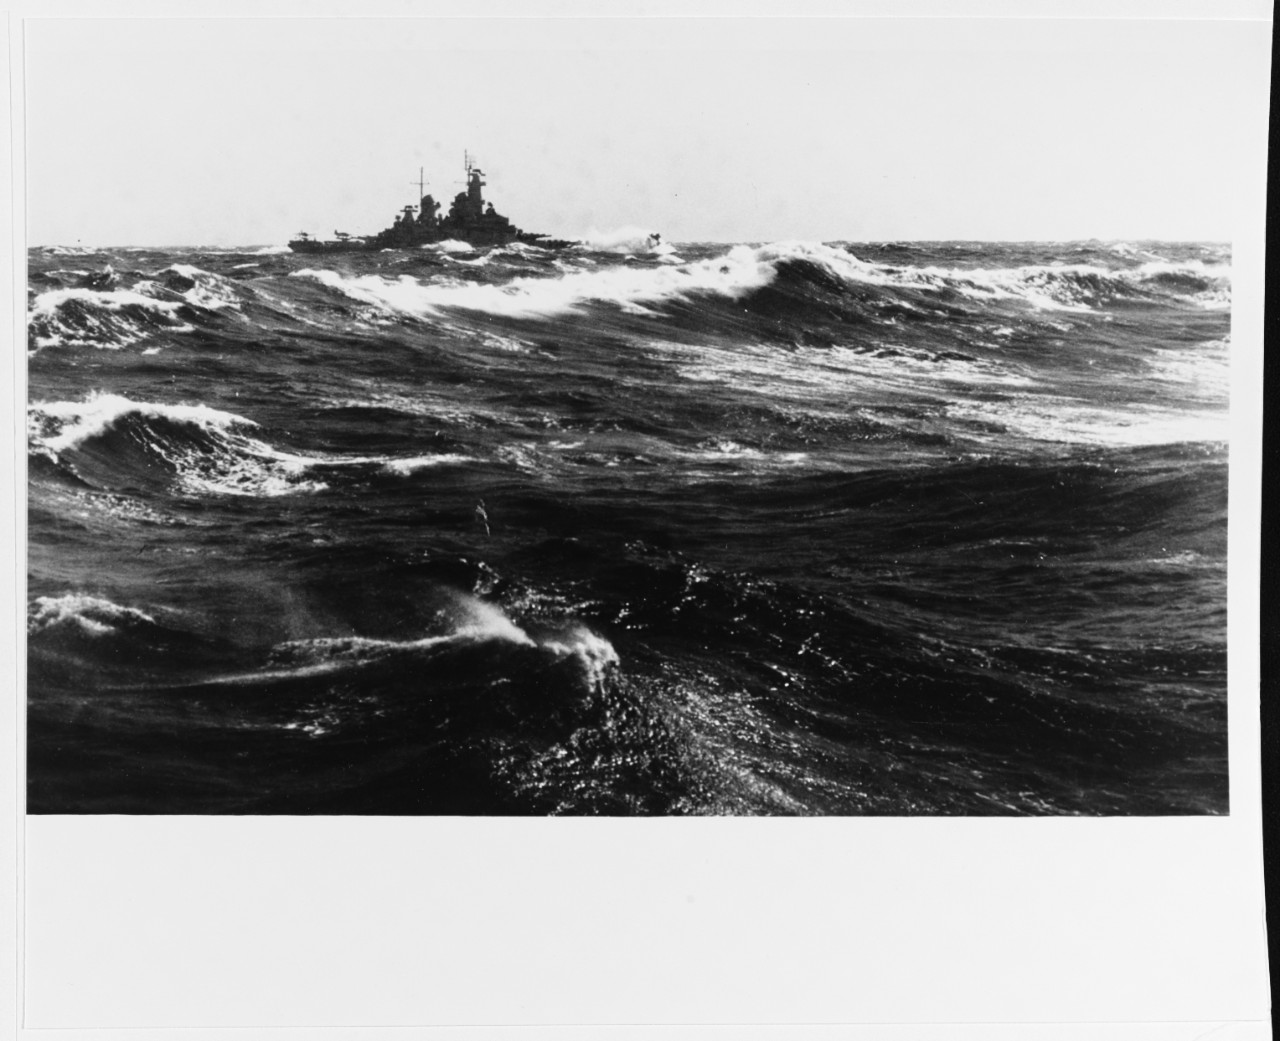 Iowa class battleship